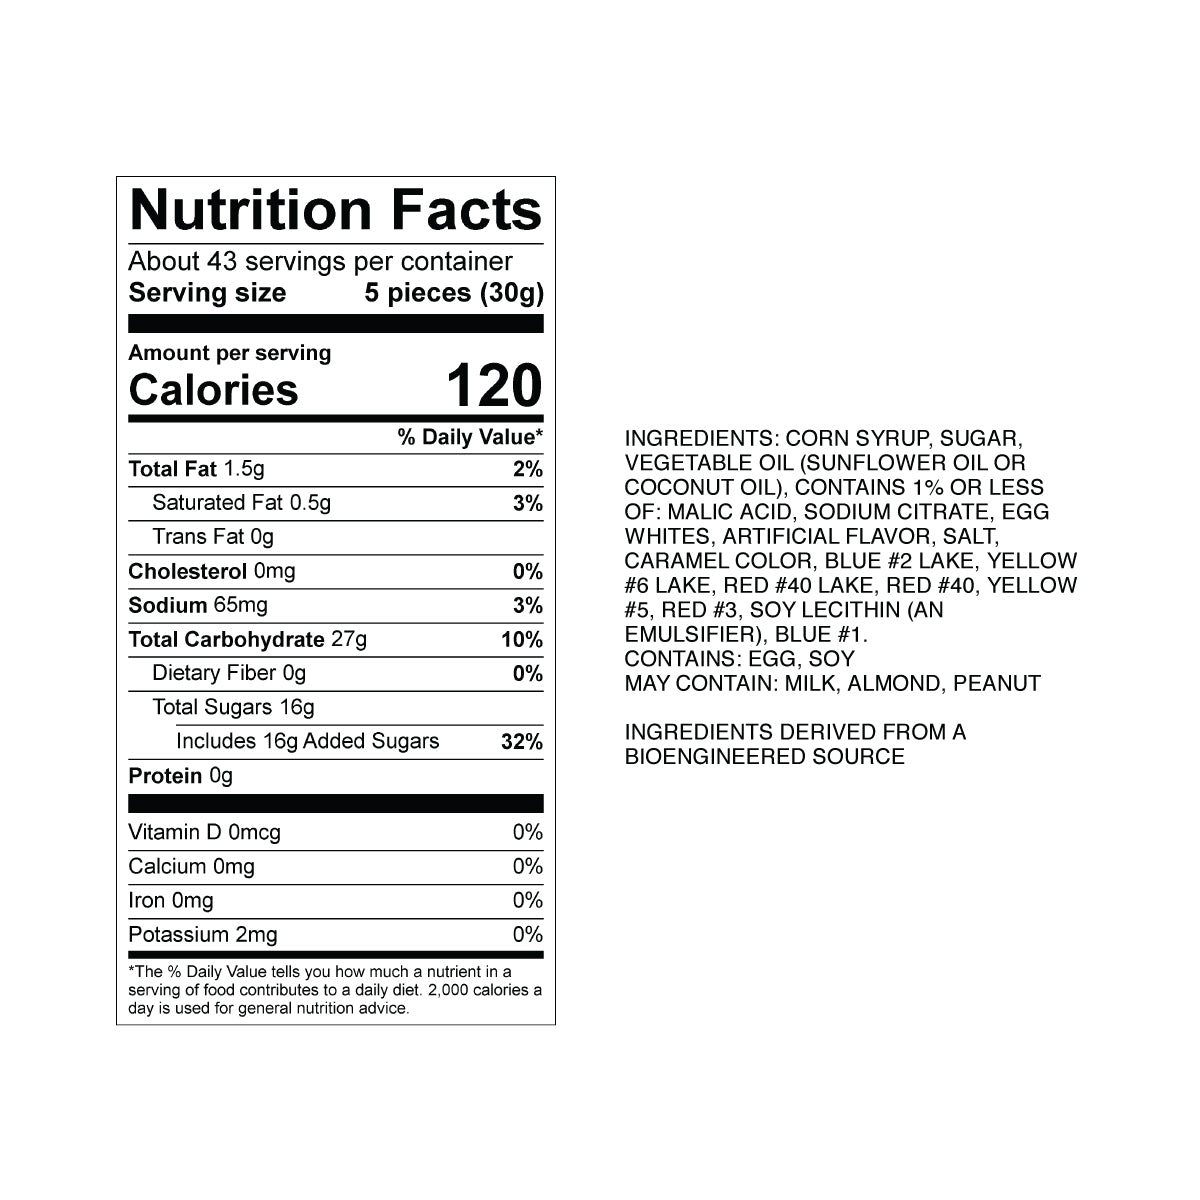 Sweet's Watermelon Taffy Nutrition Fact Panel & Ingredients for the NET WT 2.82LB (1.28kg) Bulk Bag